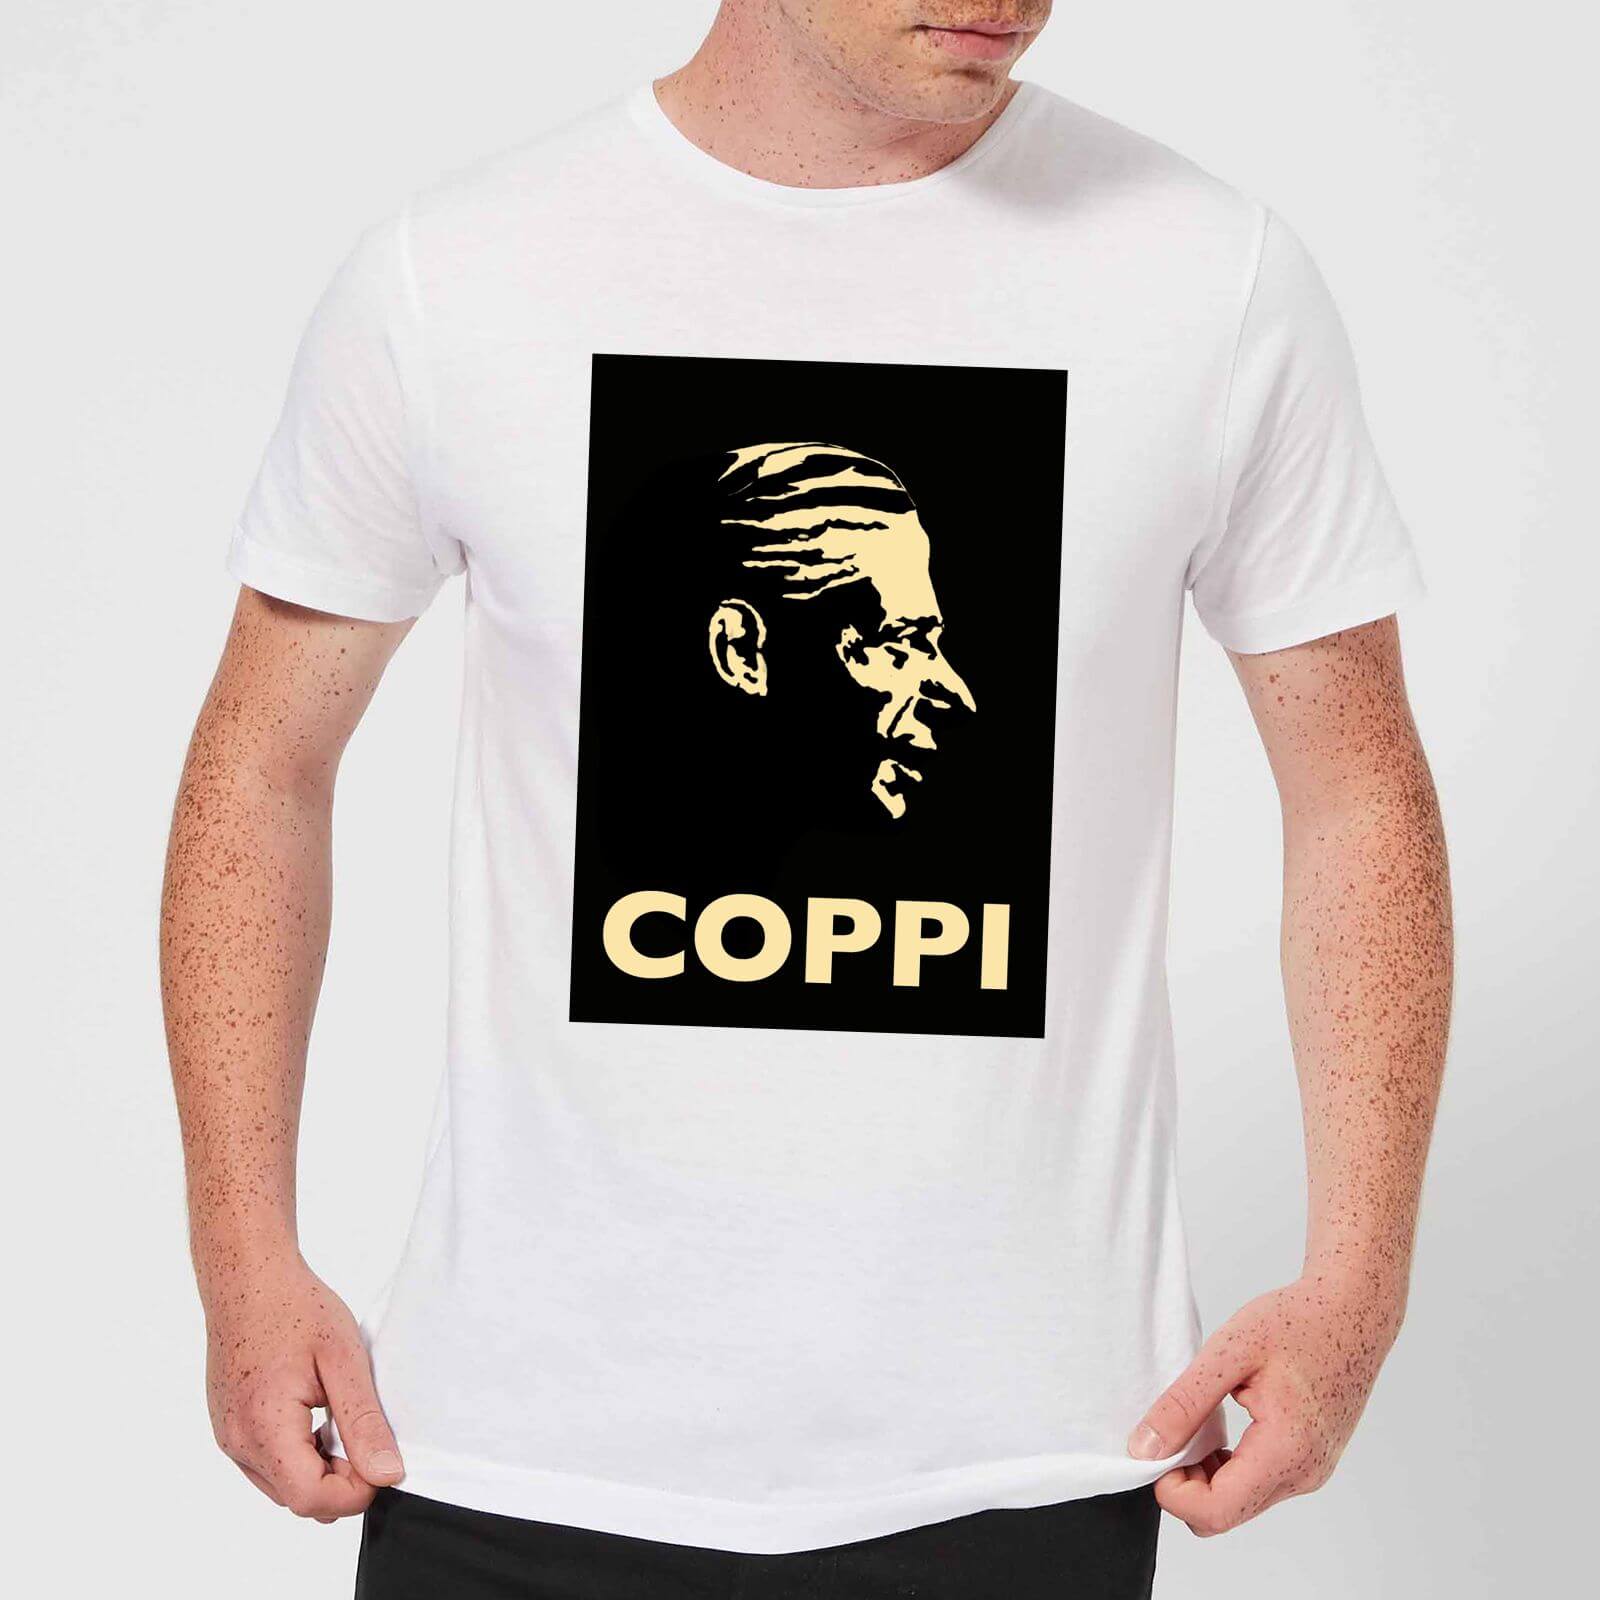 Mark Fairhurst Coppi Men's T-Shirt - White - M